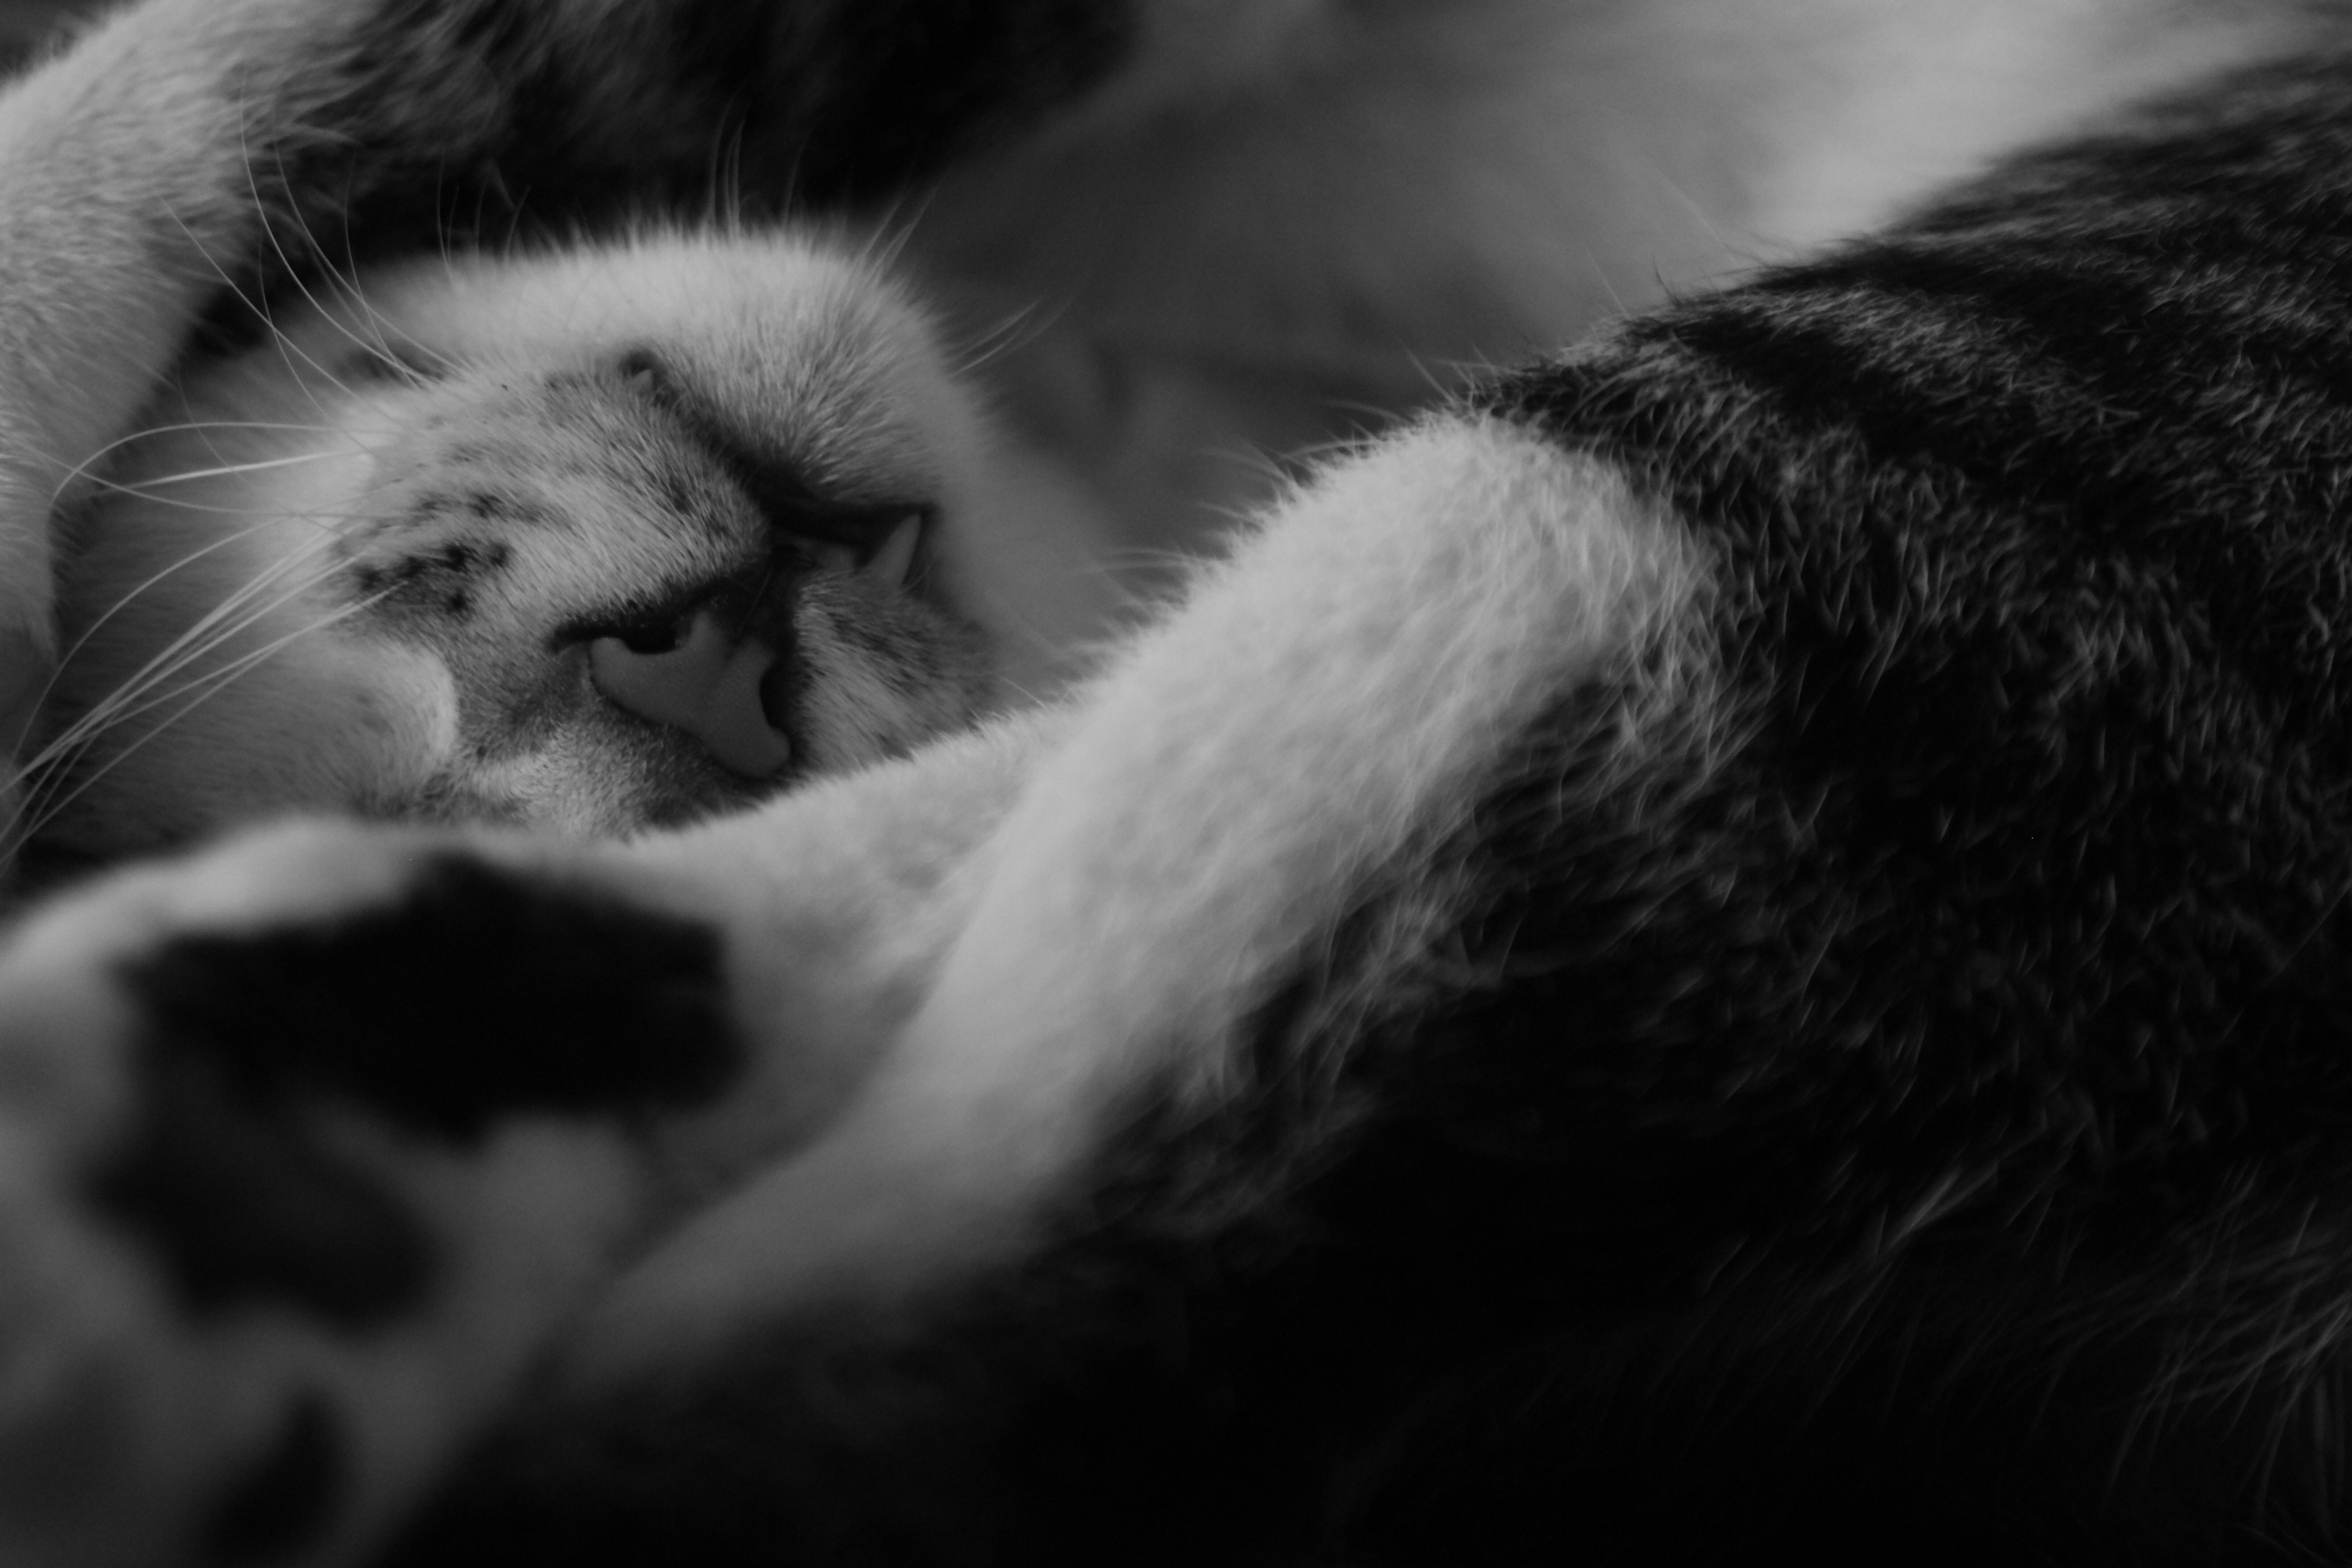 Free stock photo of cat, sleeping cat, sleepy cat